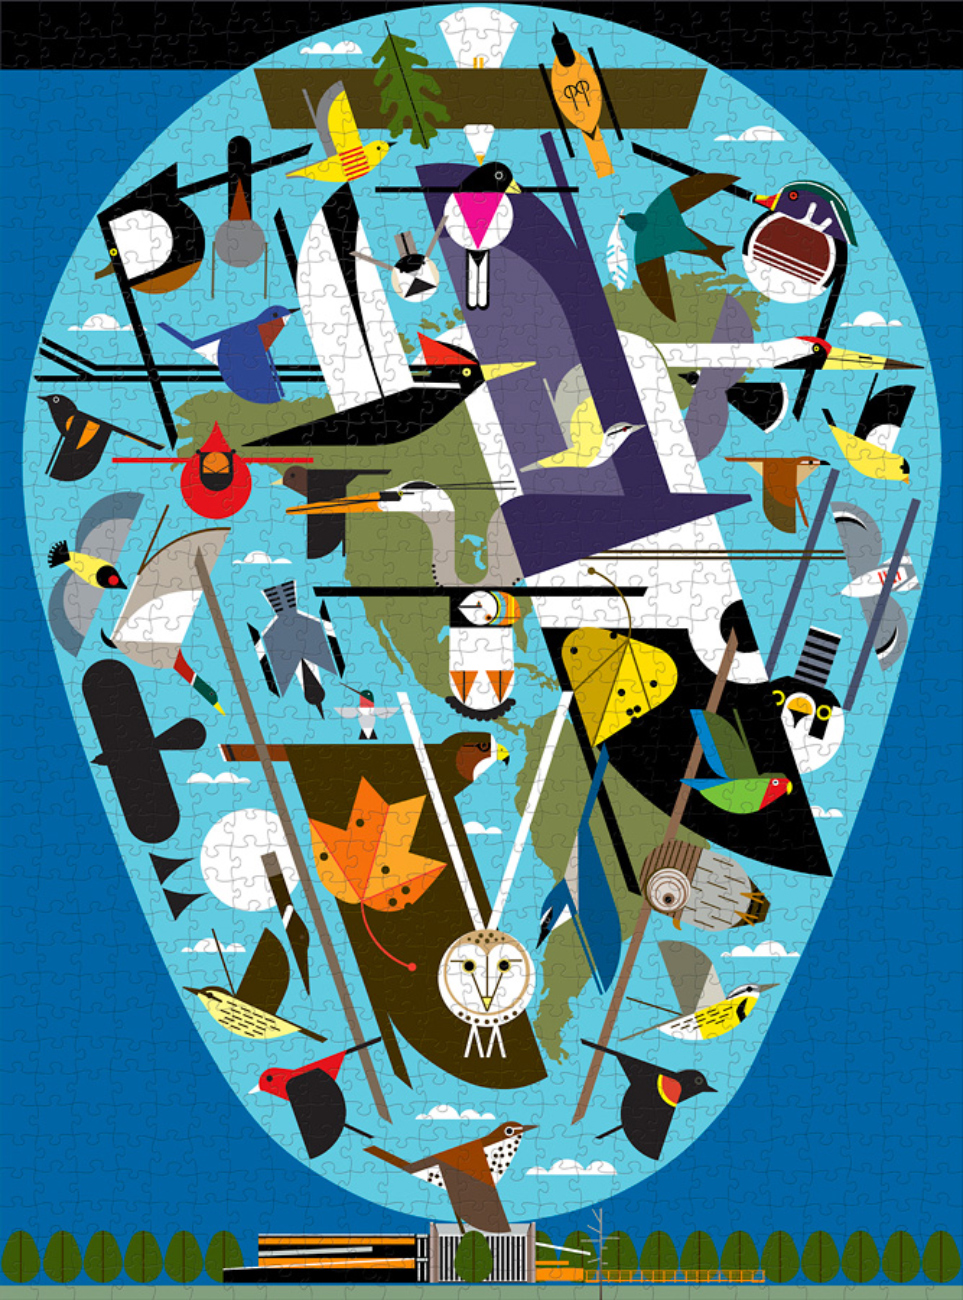 The World of Birds Birds Jigsaw Puzzle